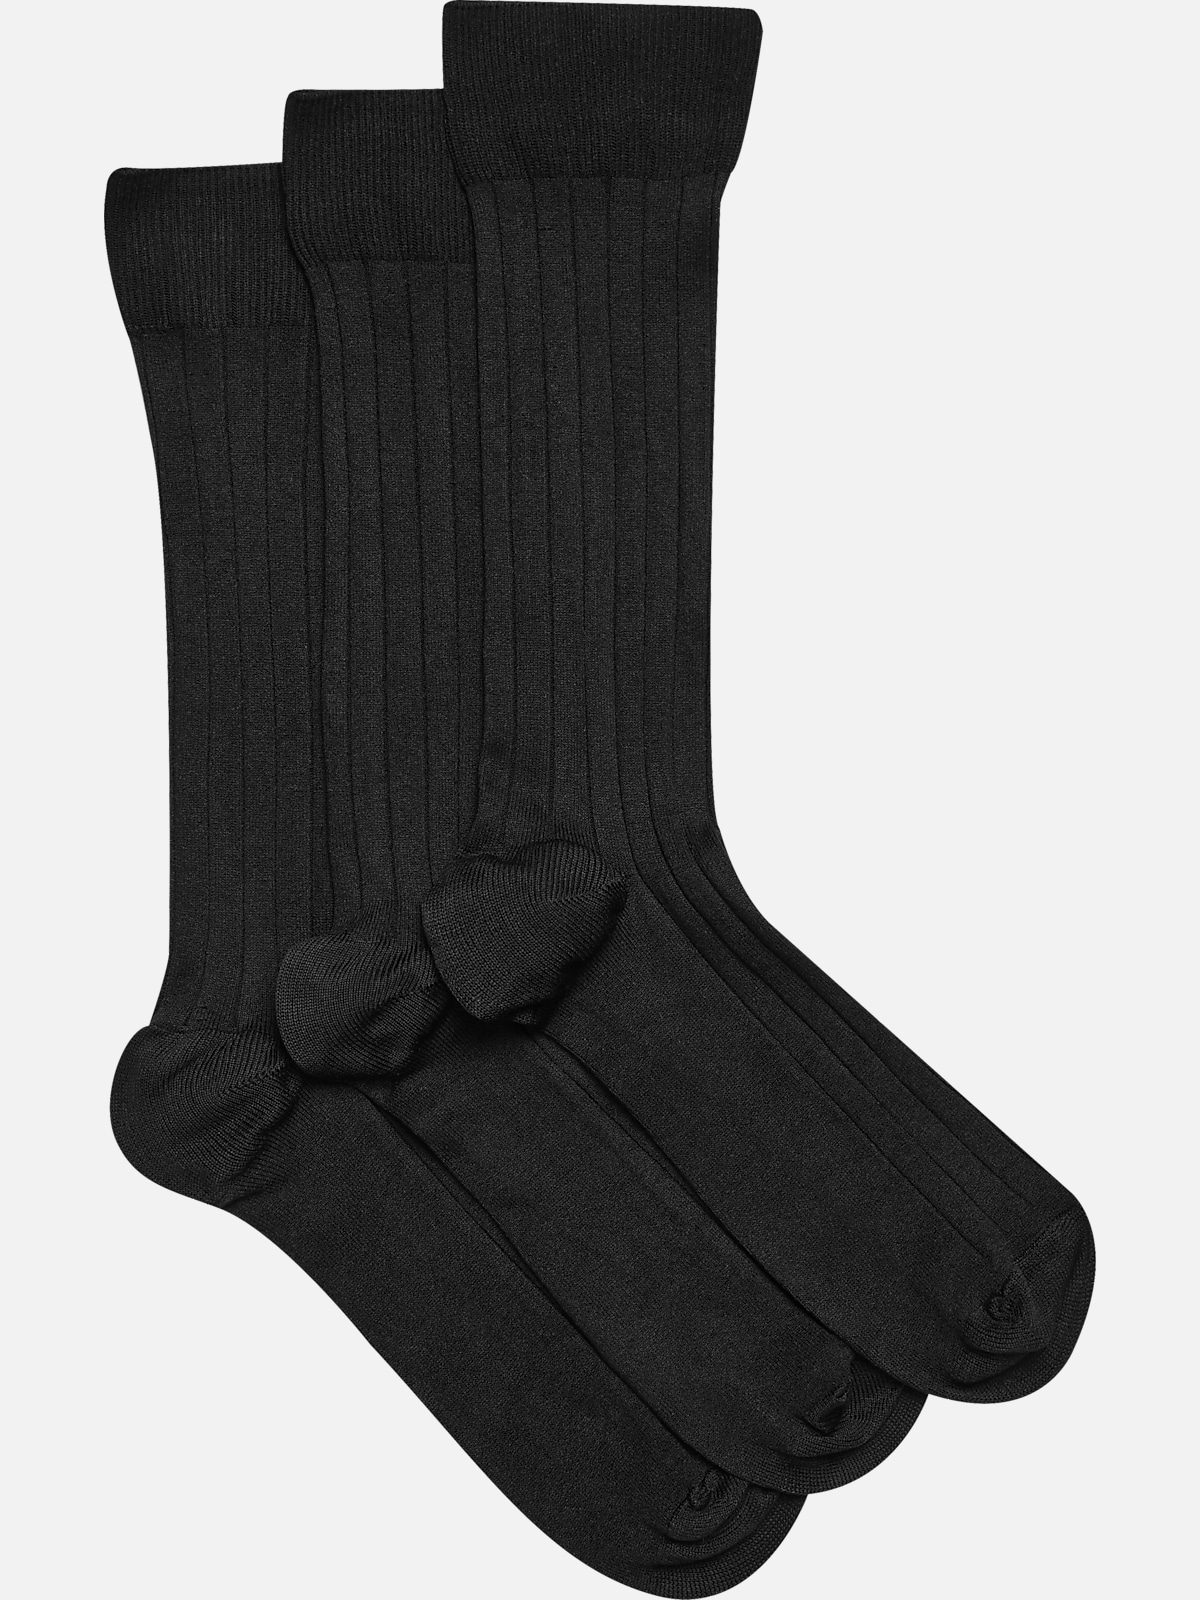 Egara Socks 3-Pack | All Clearance $39.99| Men's Wearhouse